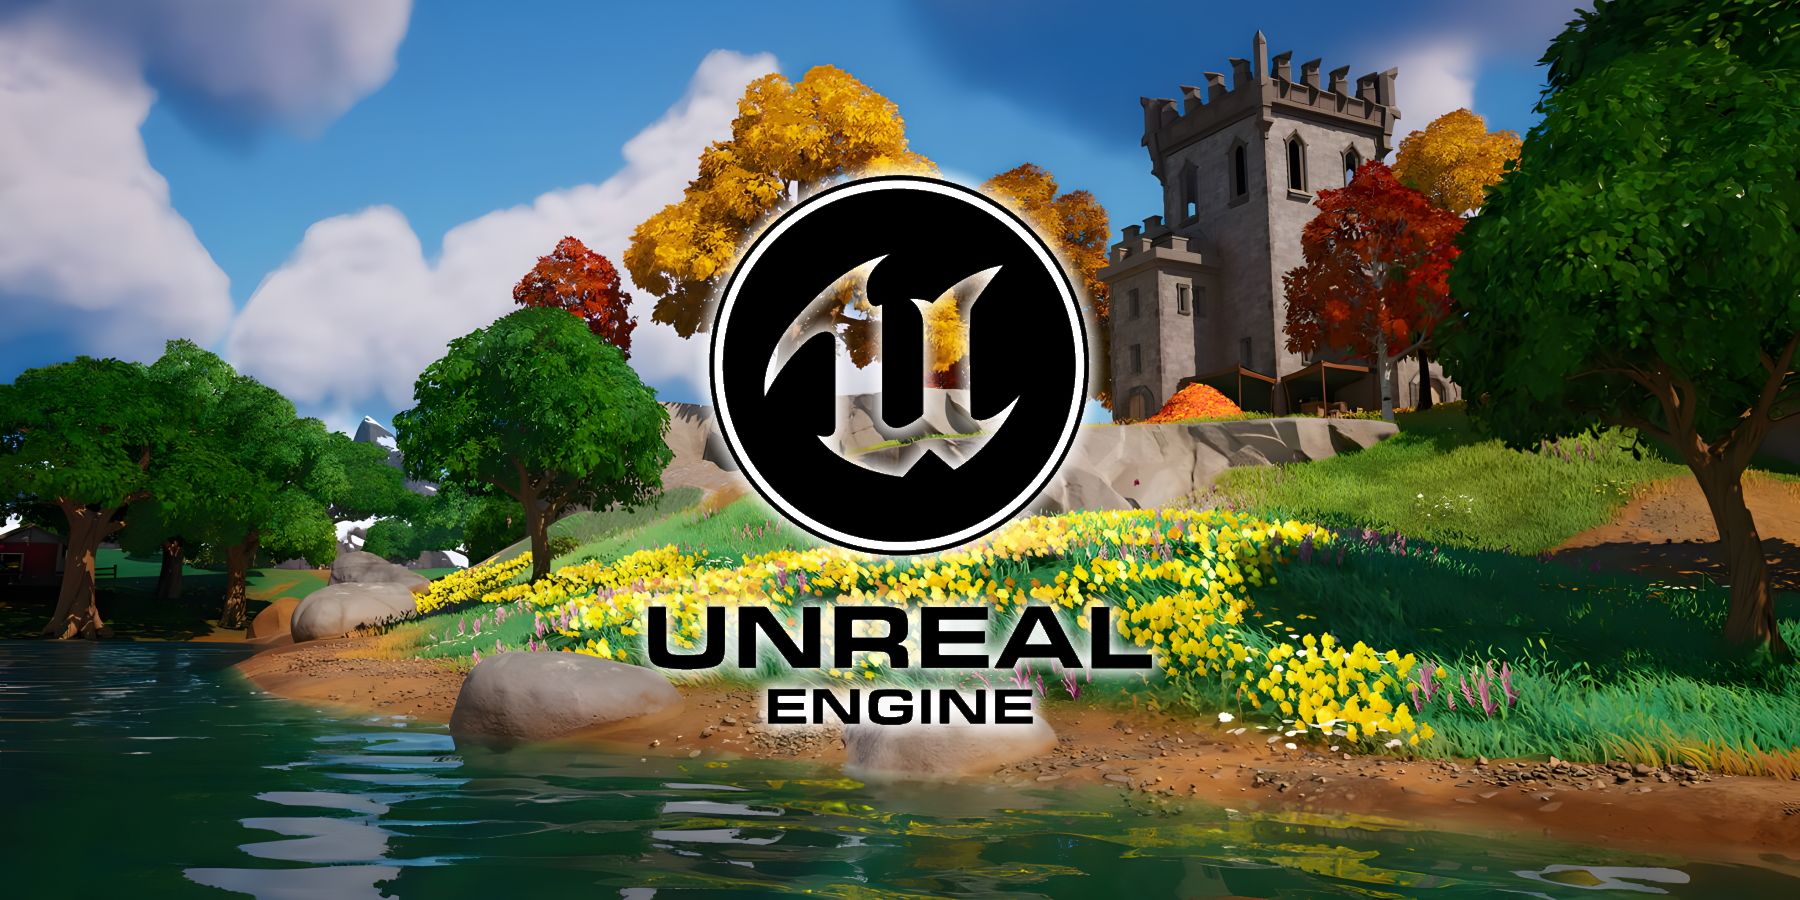 Fortnite screenshot with Unreal Engine logo